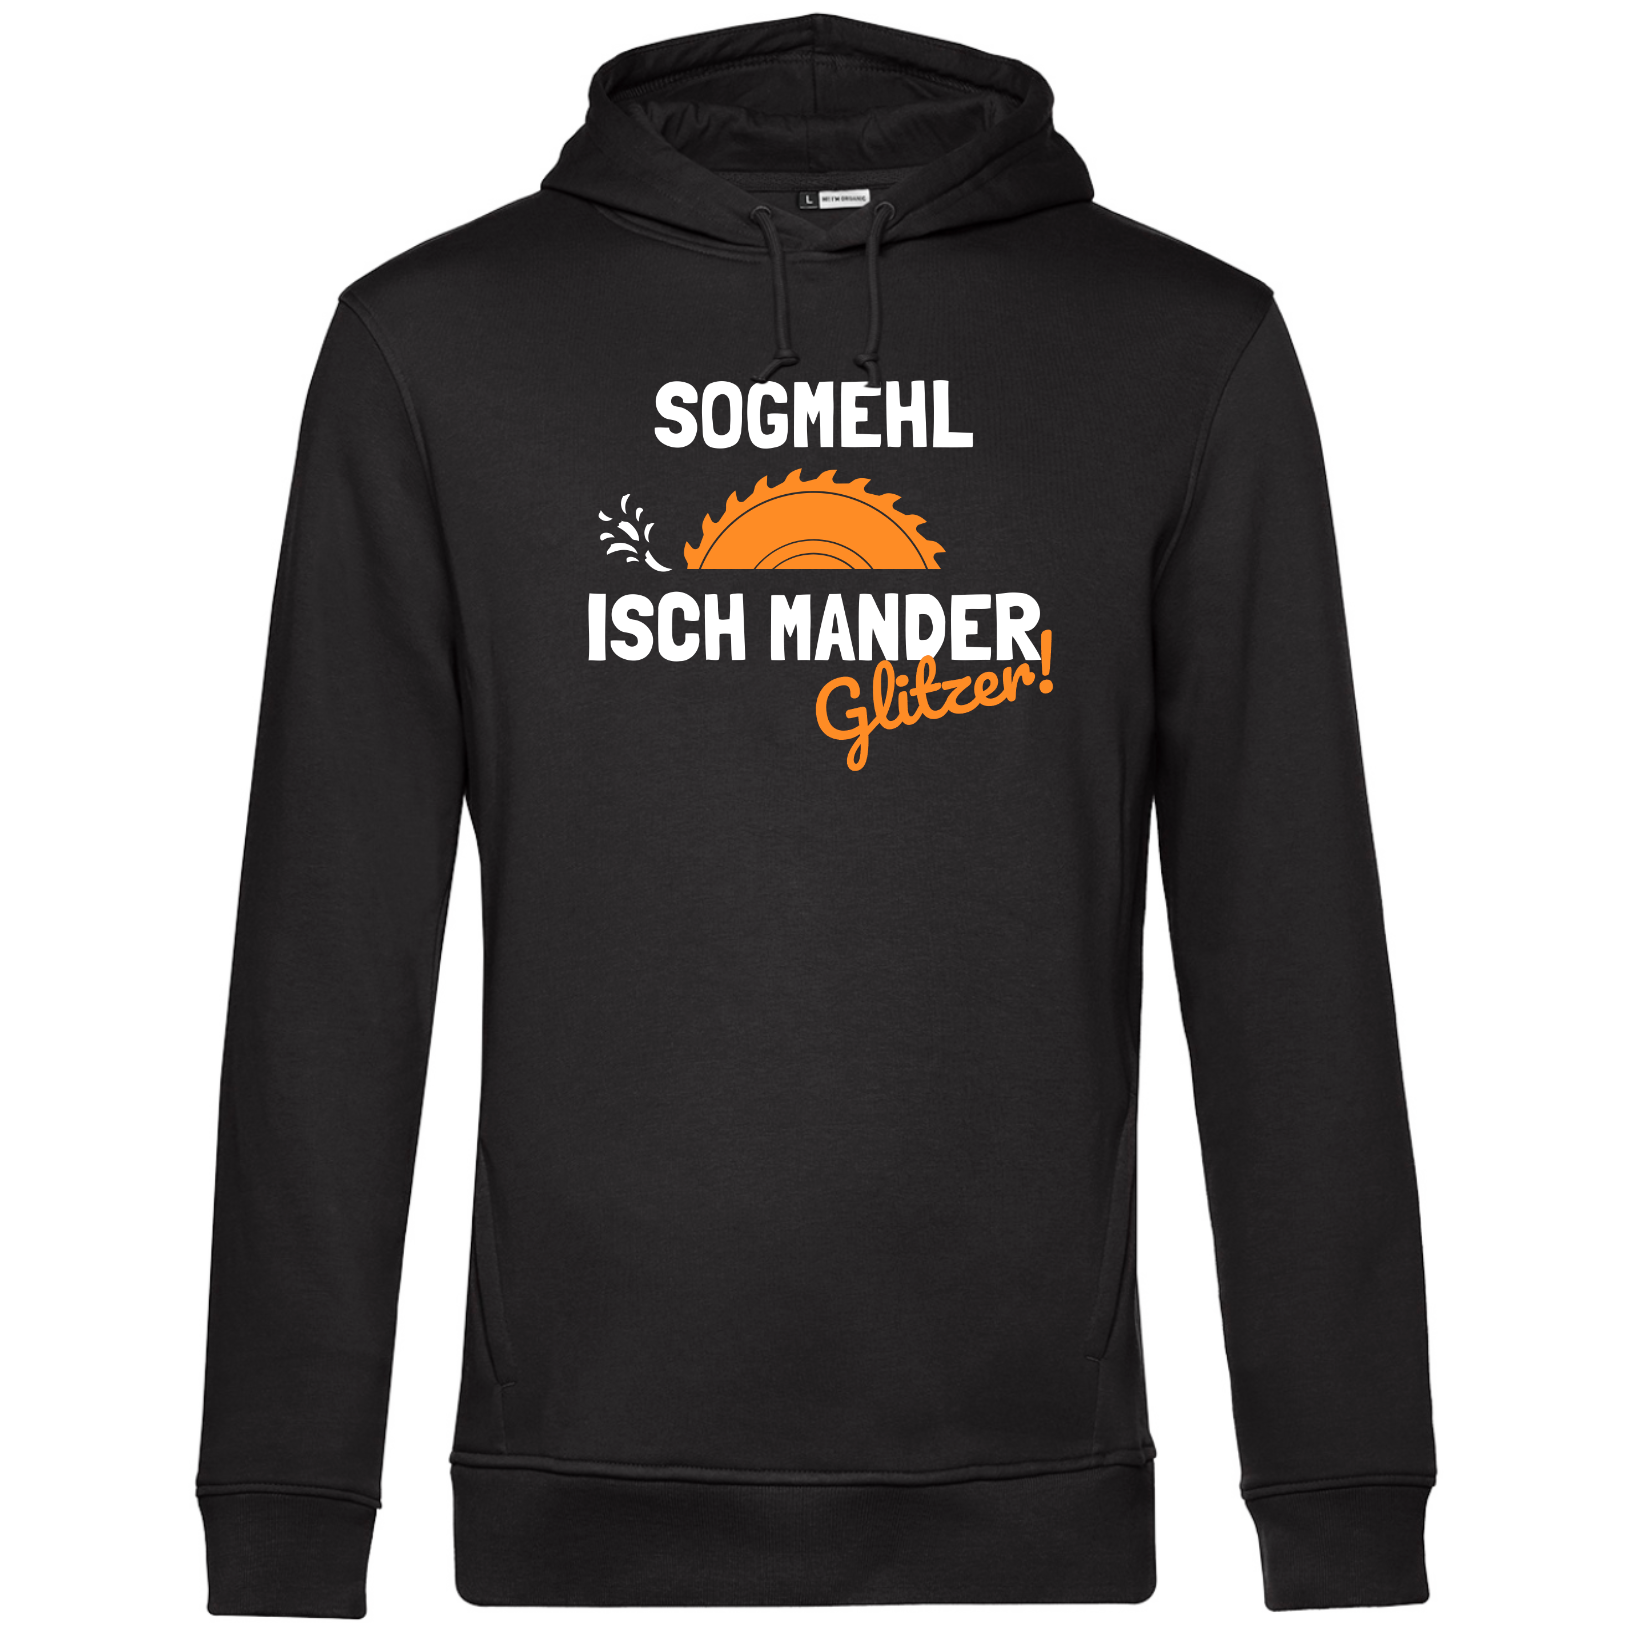 Sogmehl isch Manderglitzer - Sägeblatt - Unisex Hoodie Bio - XS / Schwarz